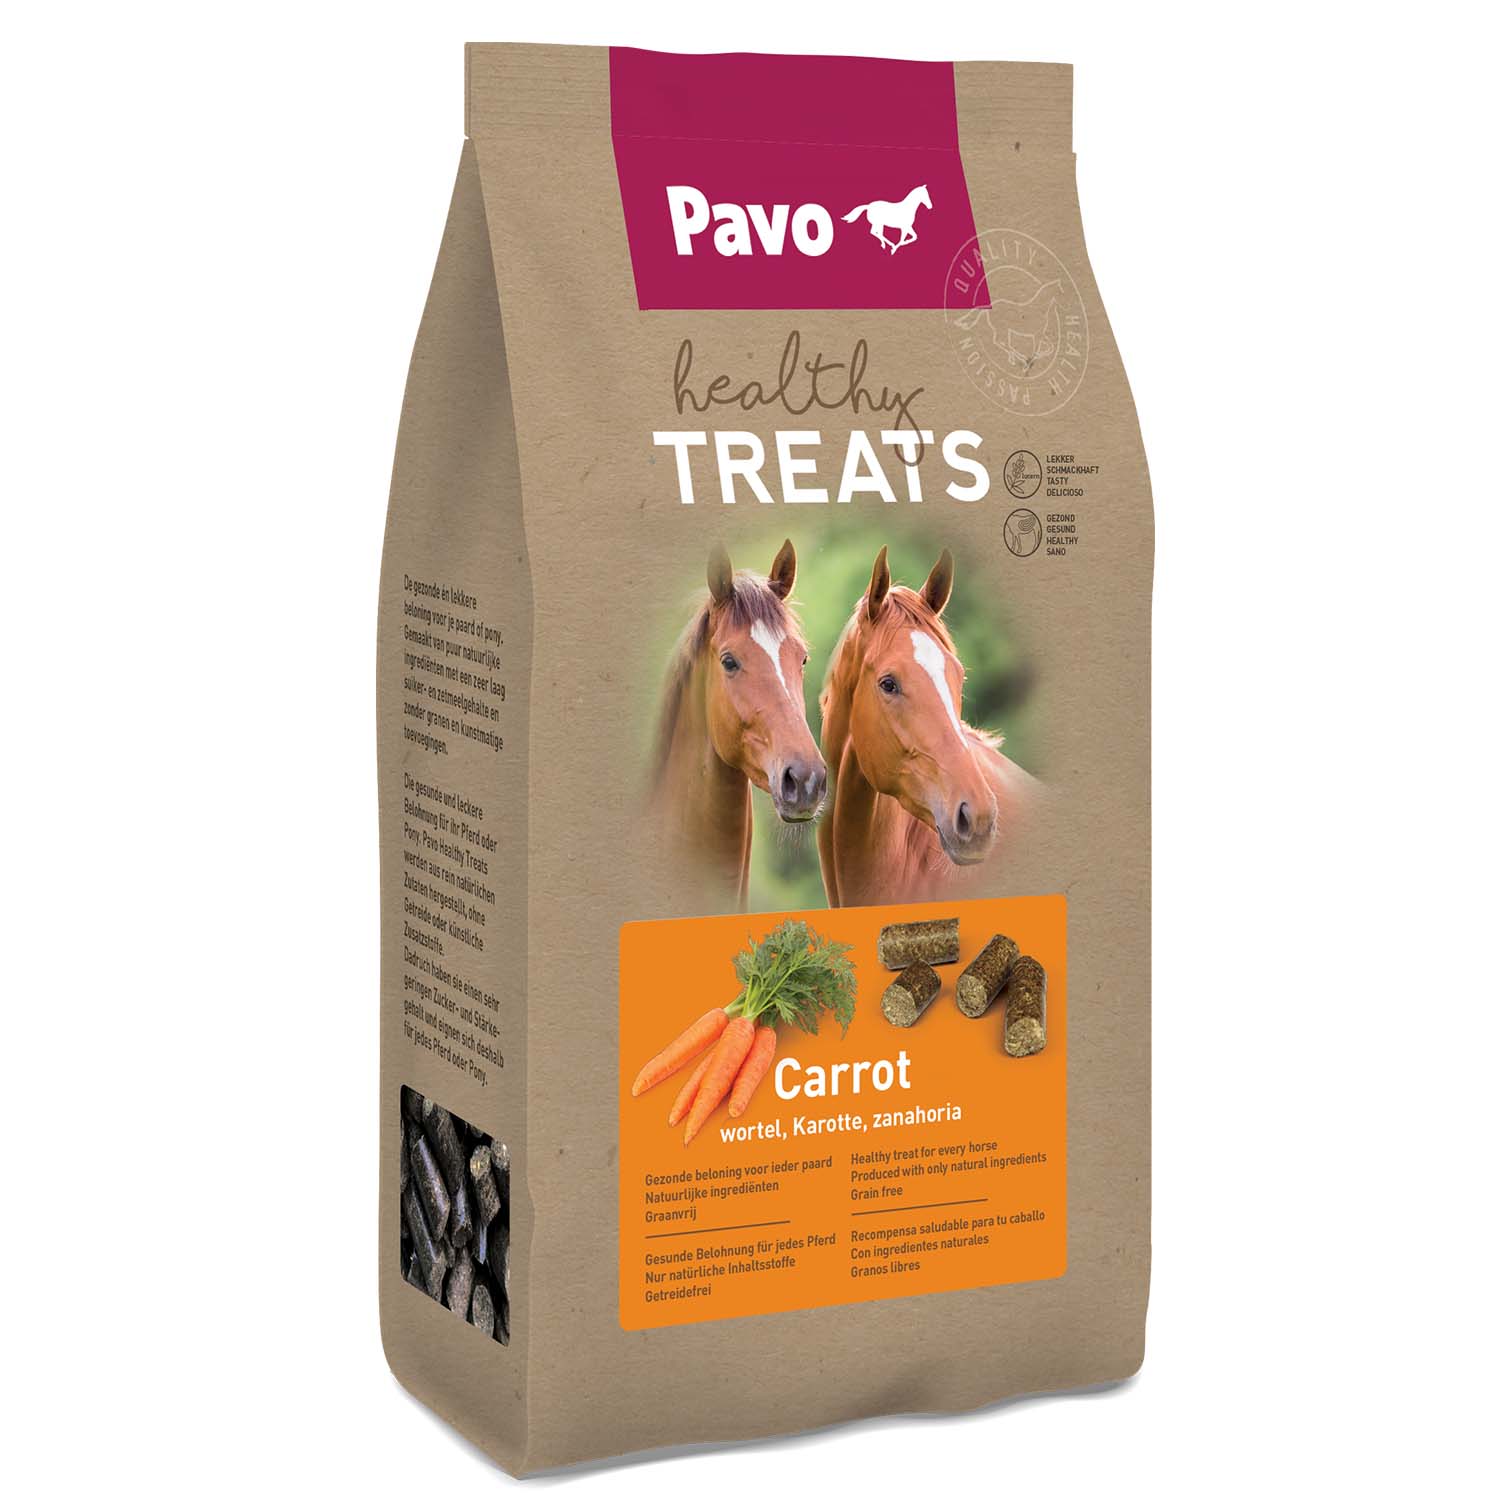 Pavo Healthy Treats Carrot 1 kg Beutel